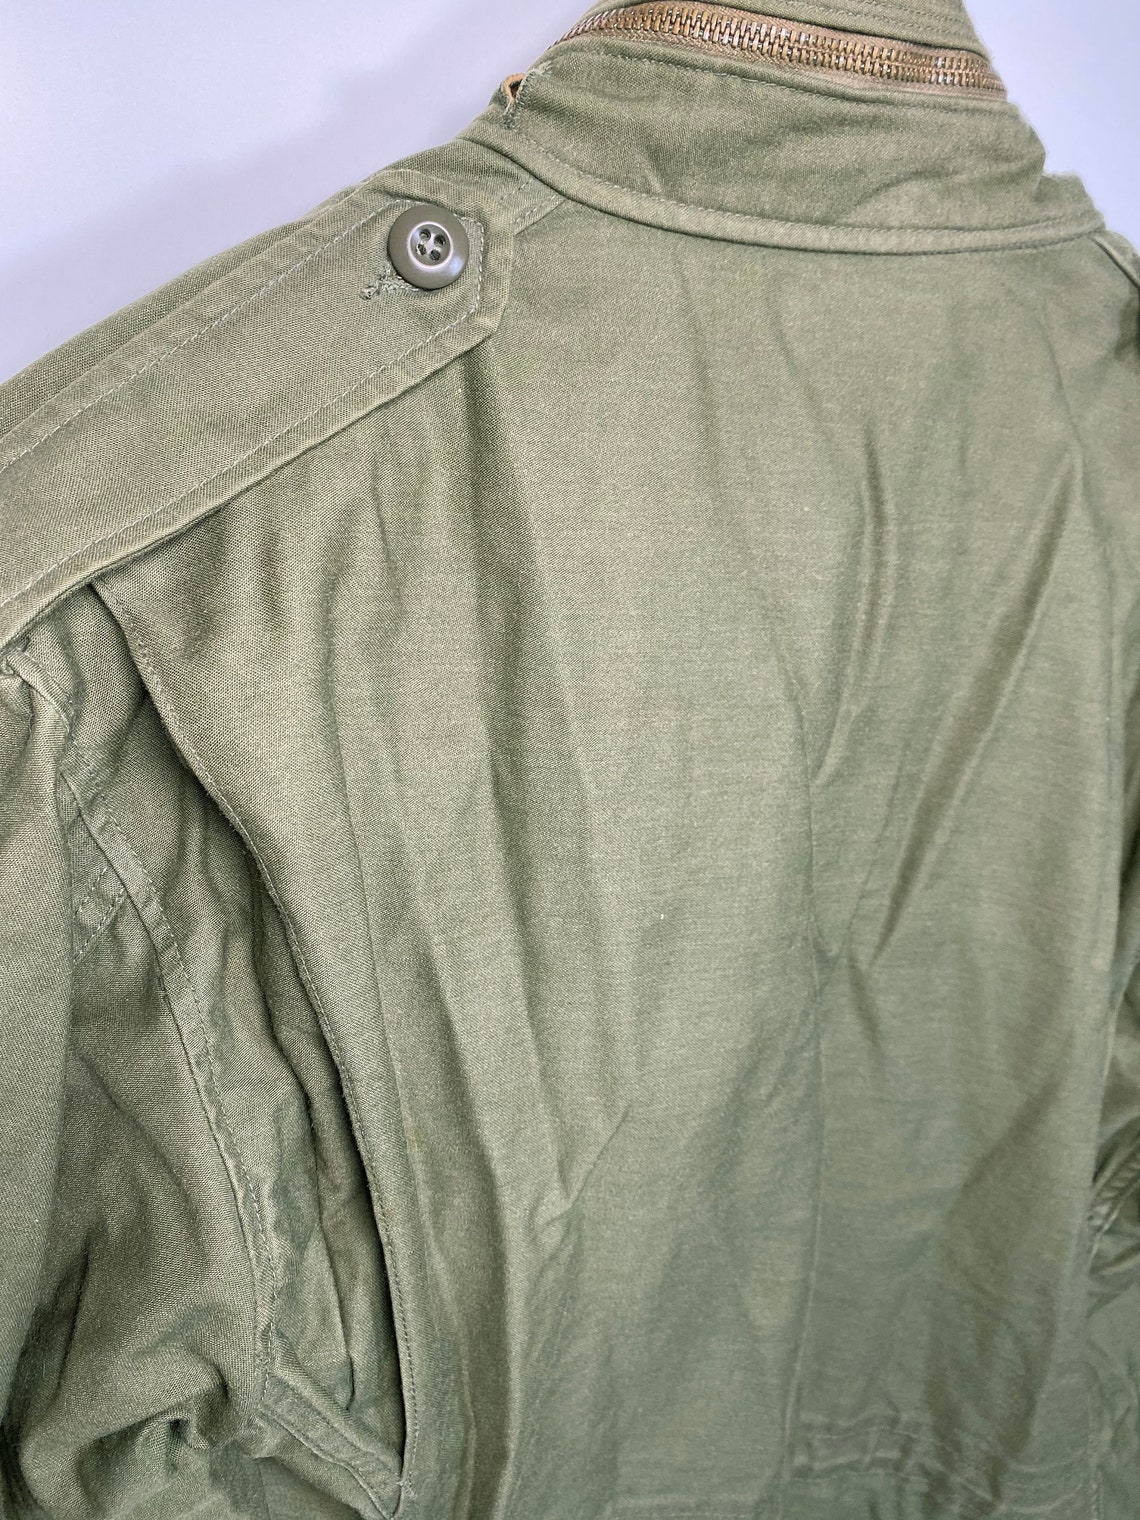 Vintage Army Green Field Jacket Mens Full Zip Coat Bomber | Etsy